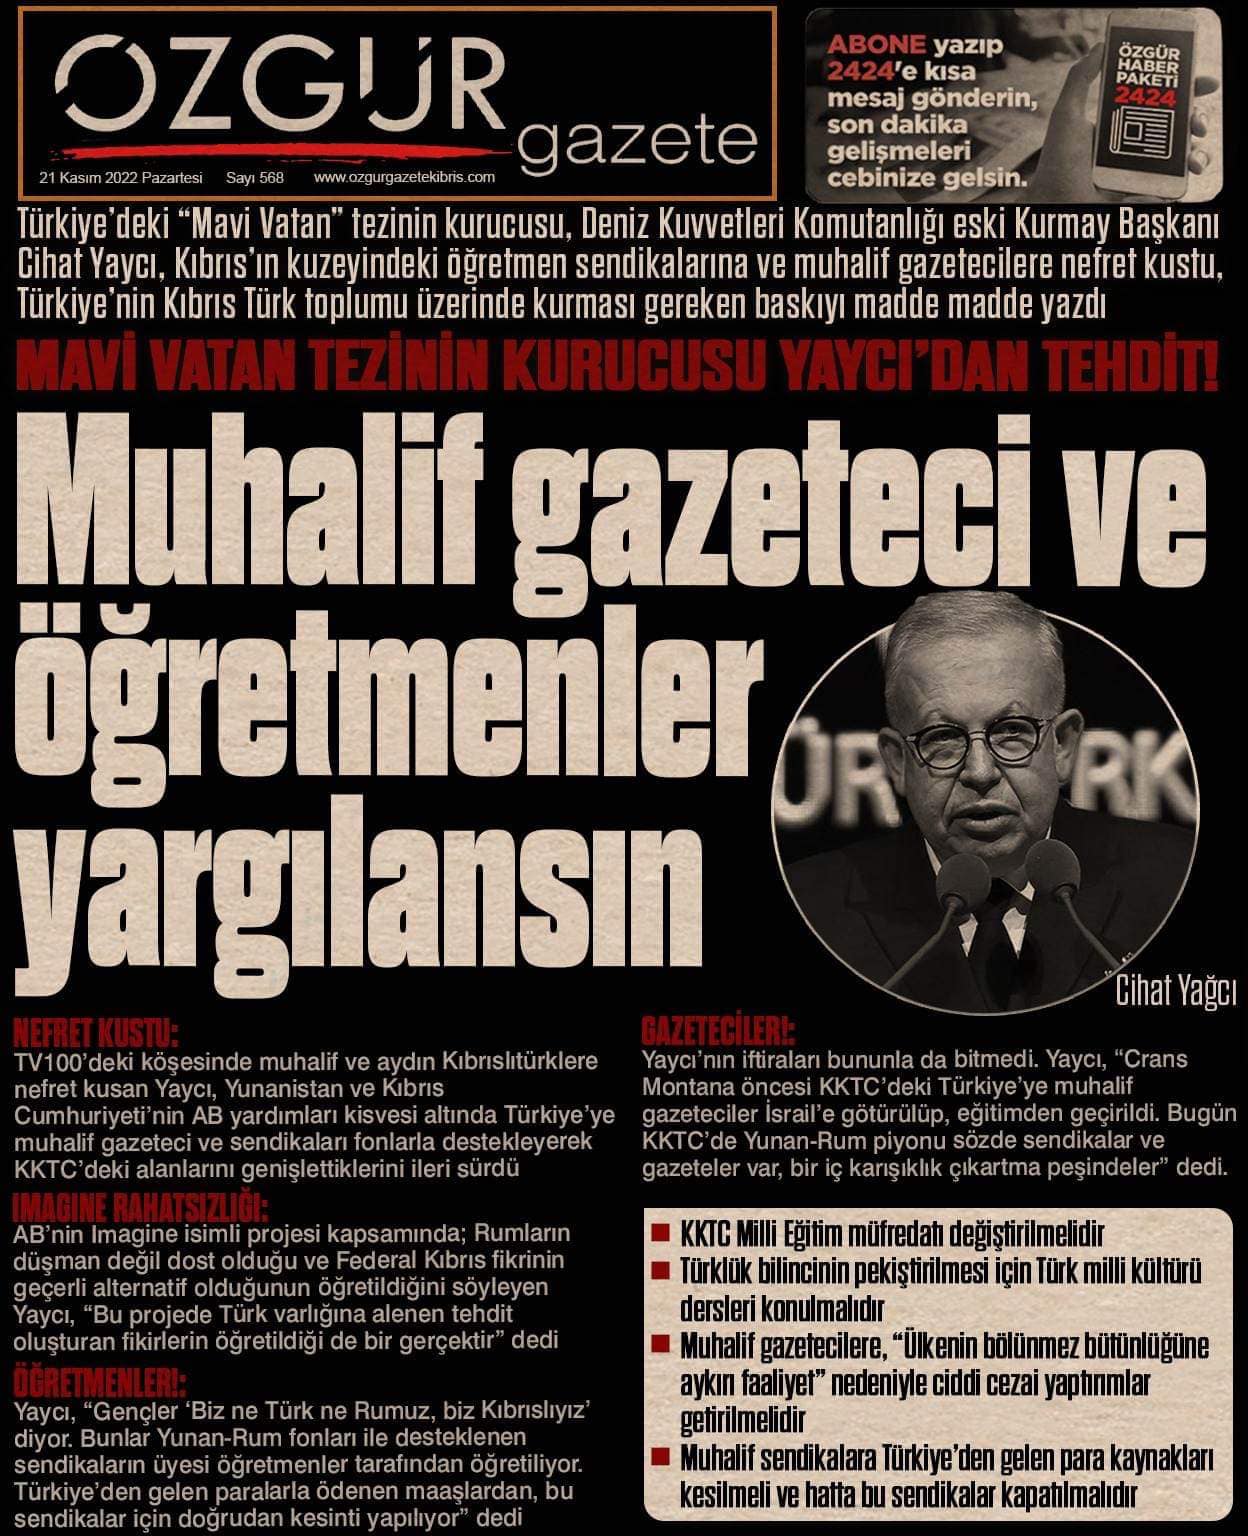 ozgur_gazete_kibris_cihat_yagci_gazeteci_ogretmen_yargi